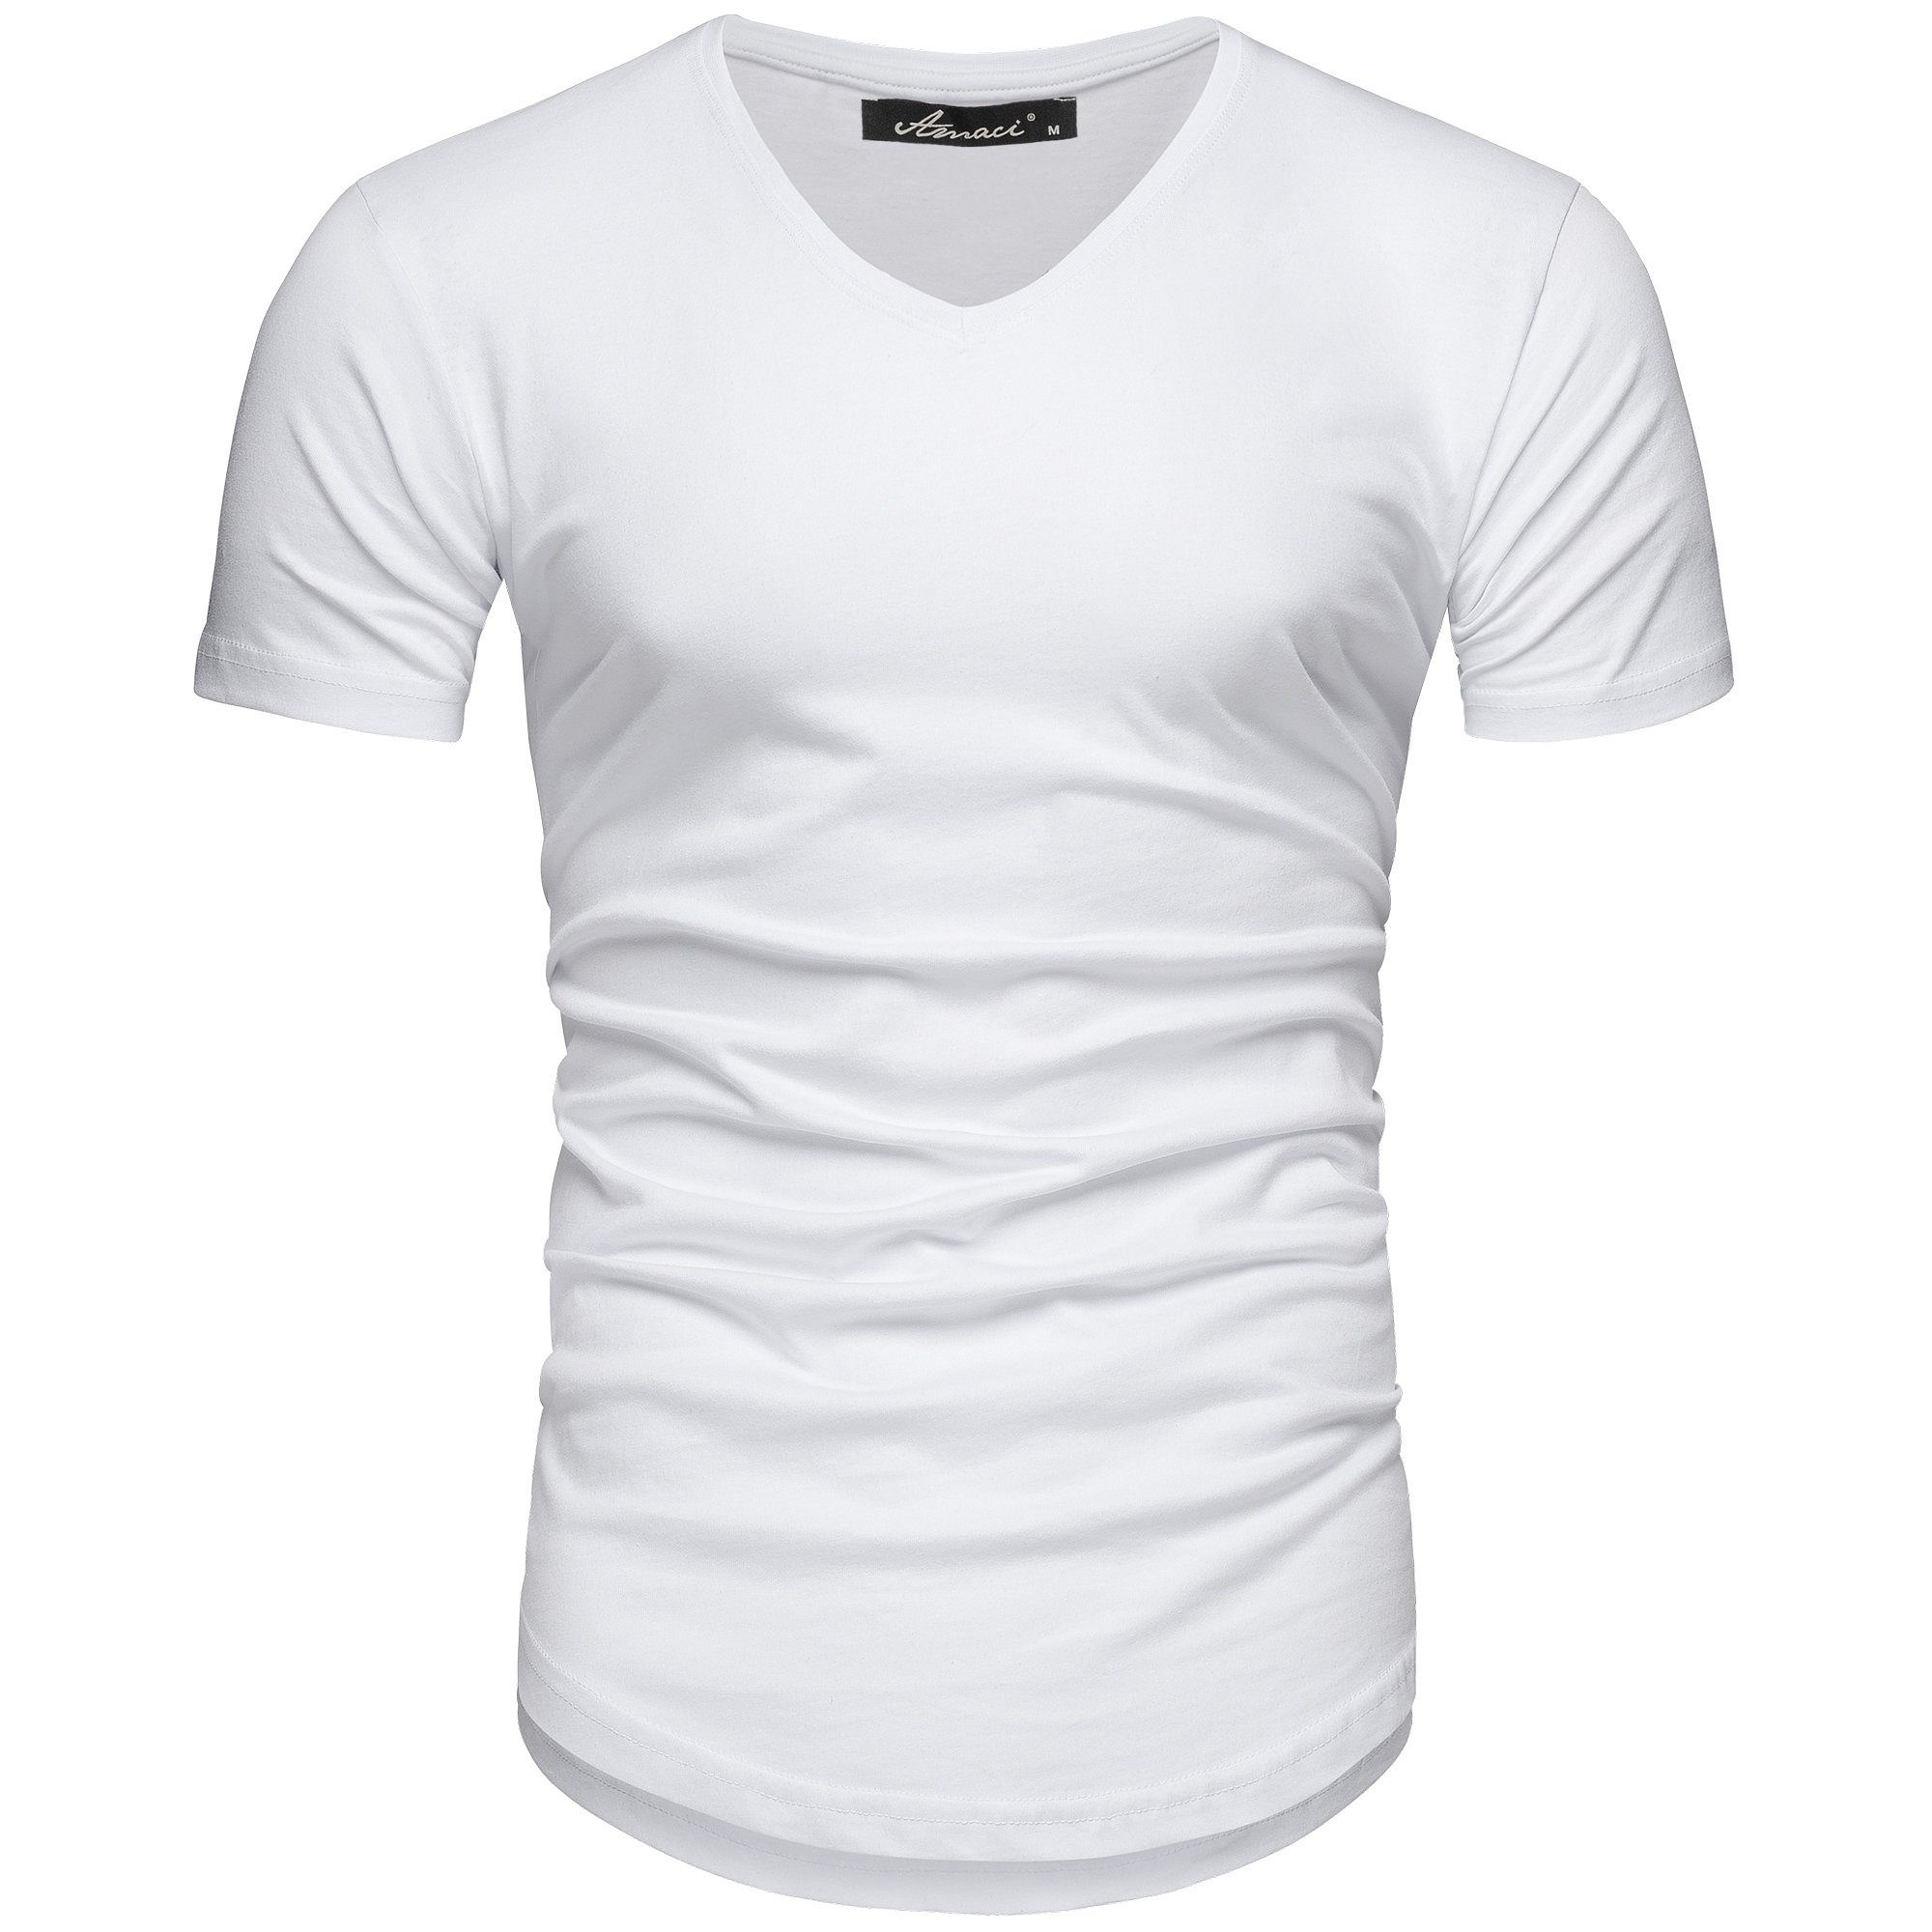 Amaci&Sons T-Shirt Weiß V-Ausschnitt Oversize T-Shirt Shirt Oversize V-Neck Basic mit BELLEVUE Vintage V-Ausschnitt Basic Herren